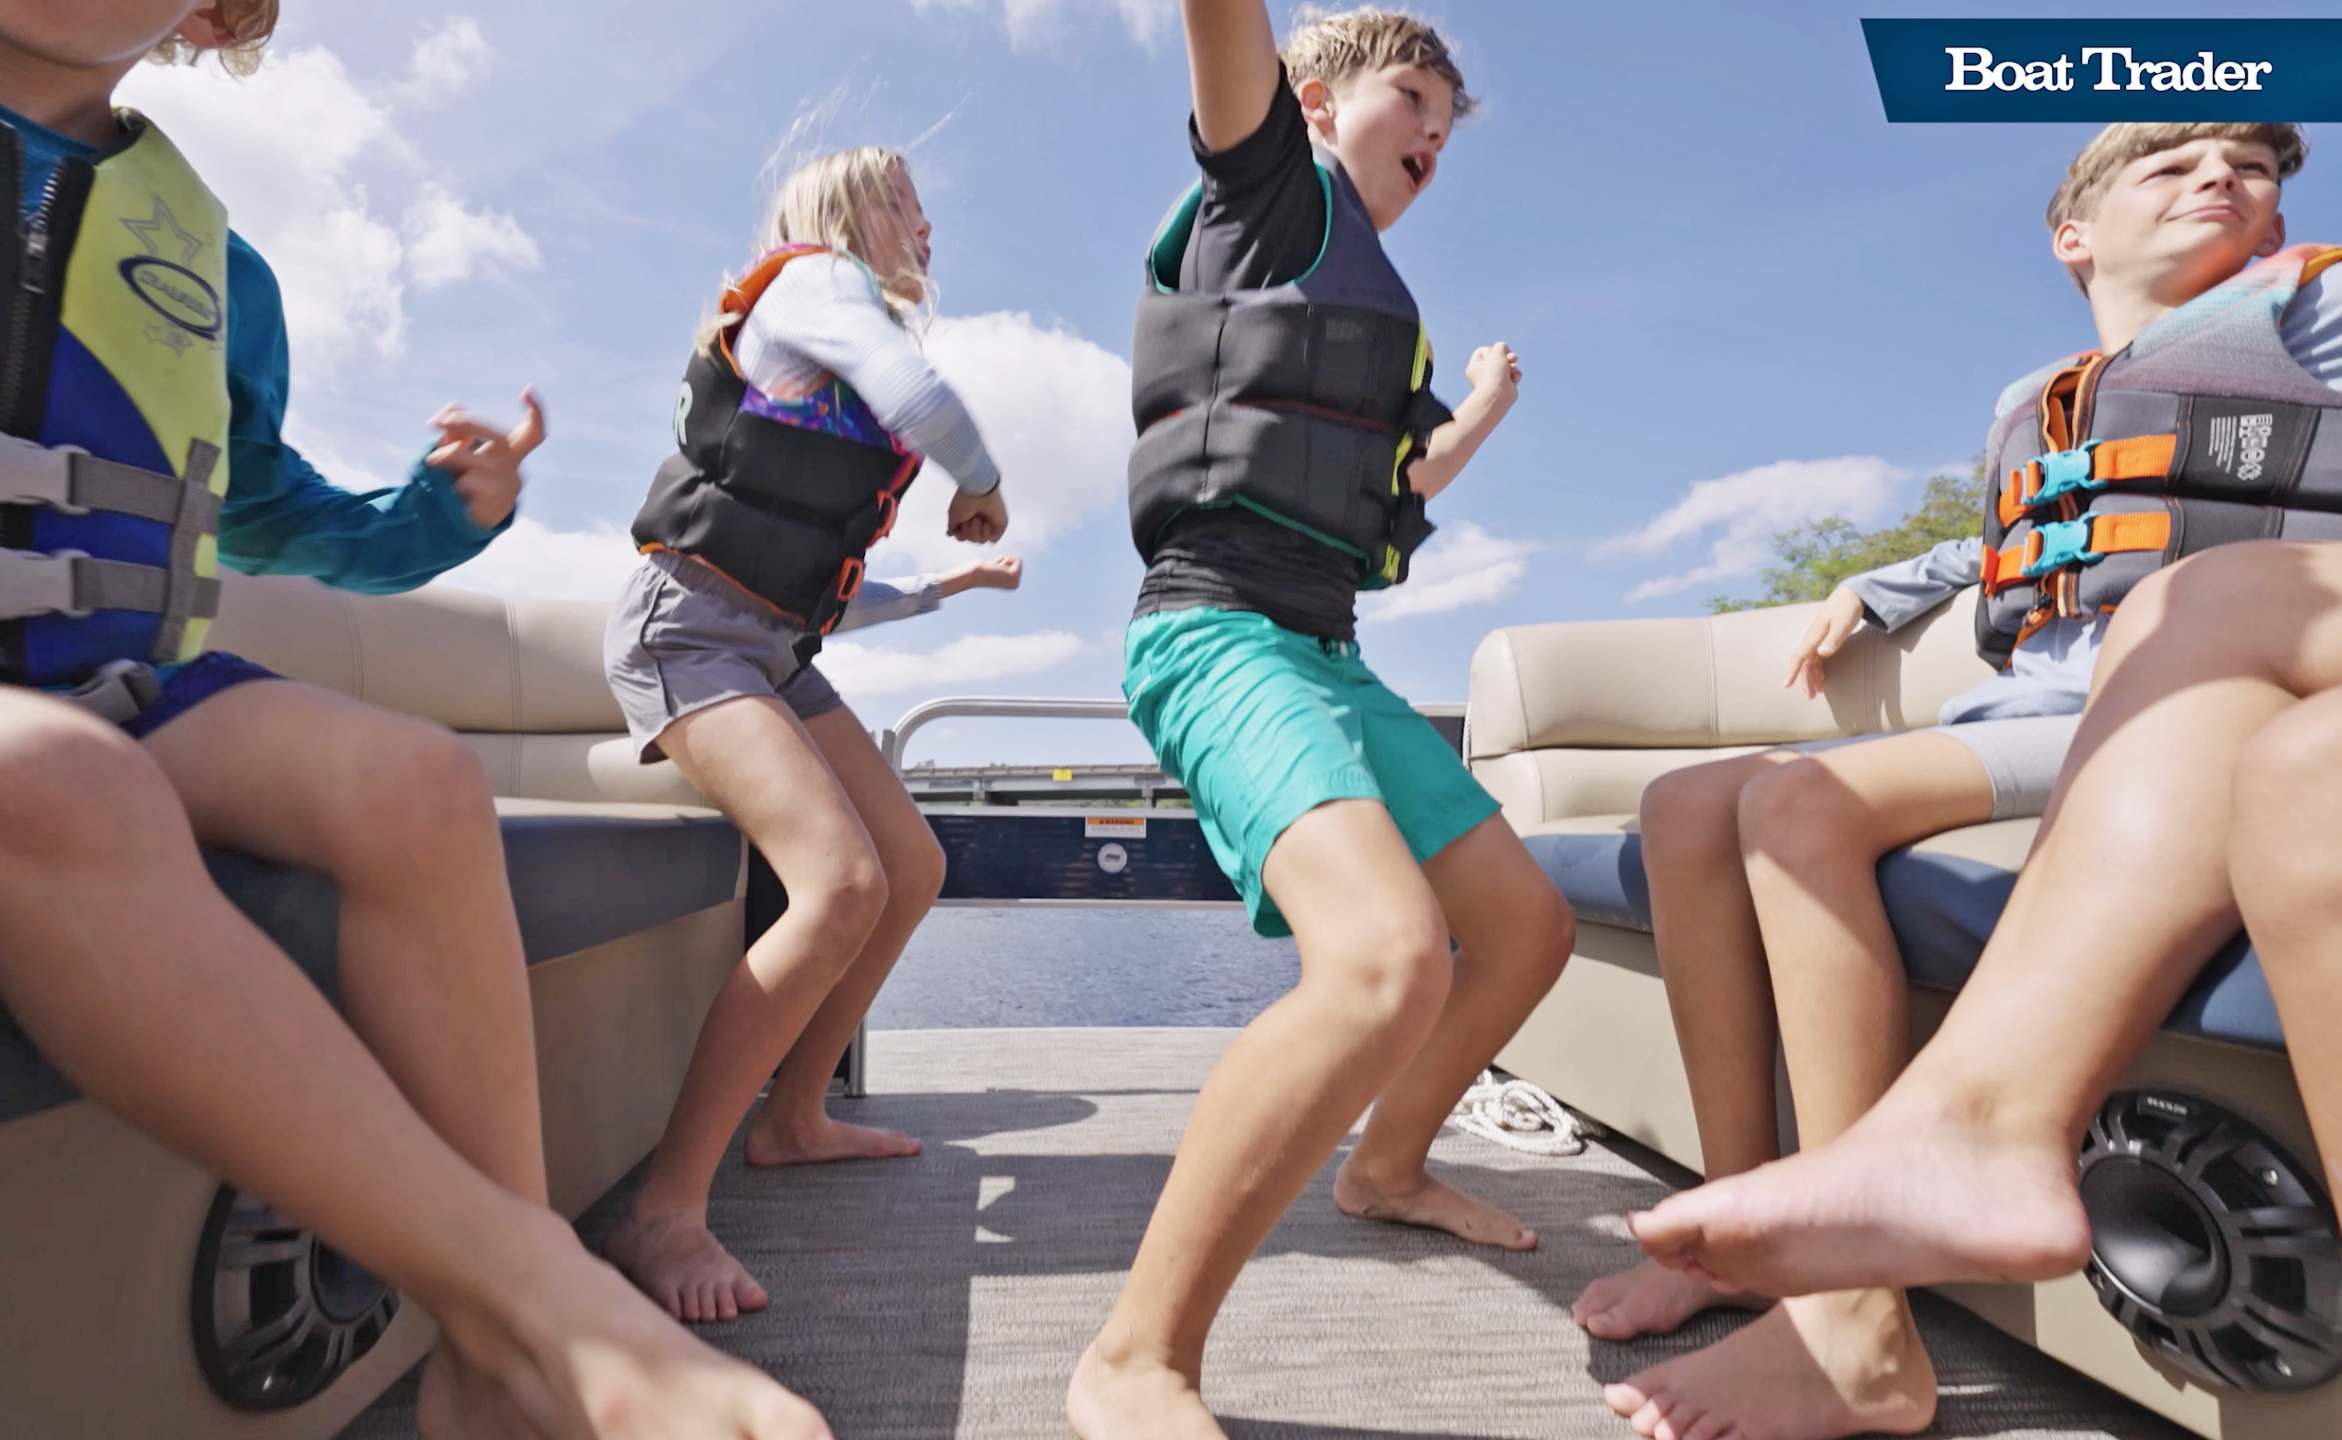 Kids Dancing On Pontoon Boat - Kicker Marine Audio Boat Trader